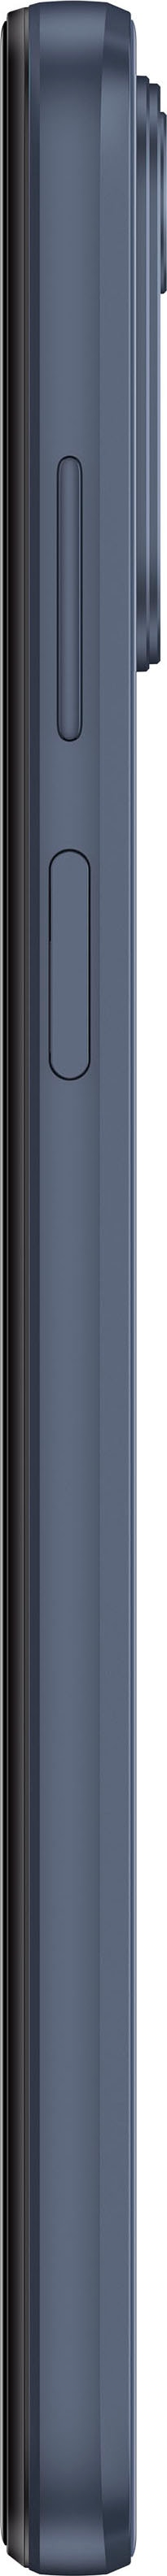 Motorola Smartphone »e32«, Gravity Grey, 16,51 cm/6,5 Zoll, 64 GB Speicherplatz, 16 MP Kamera